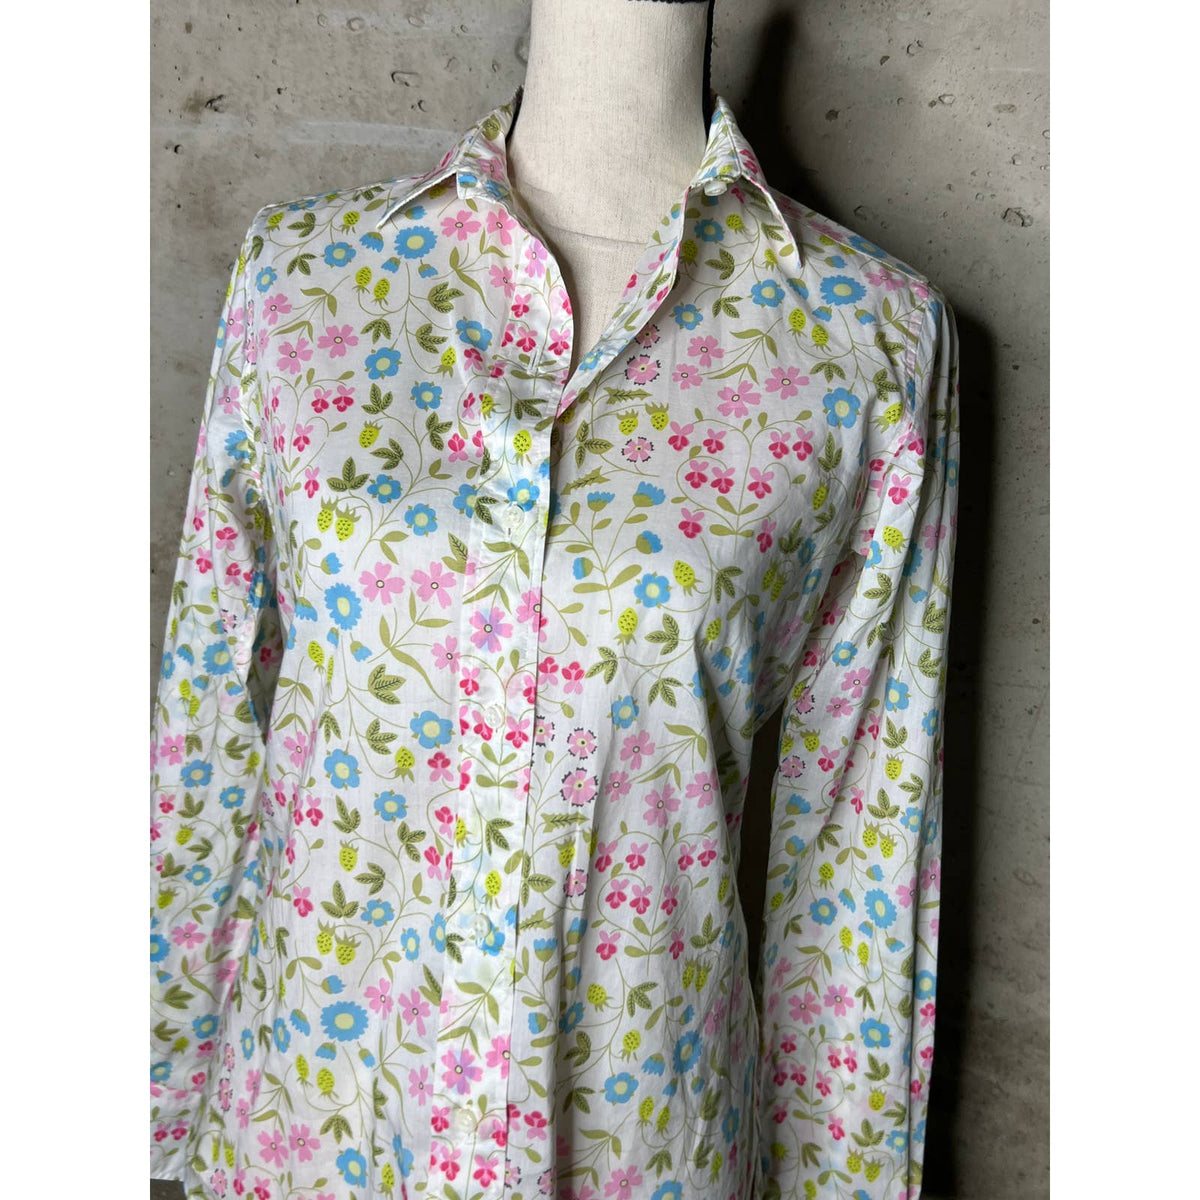 Ann Mashburn Floral Button-Up Blouse Sz. Small